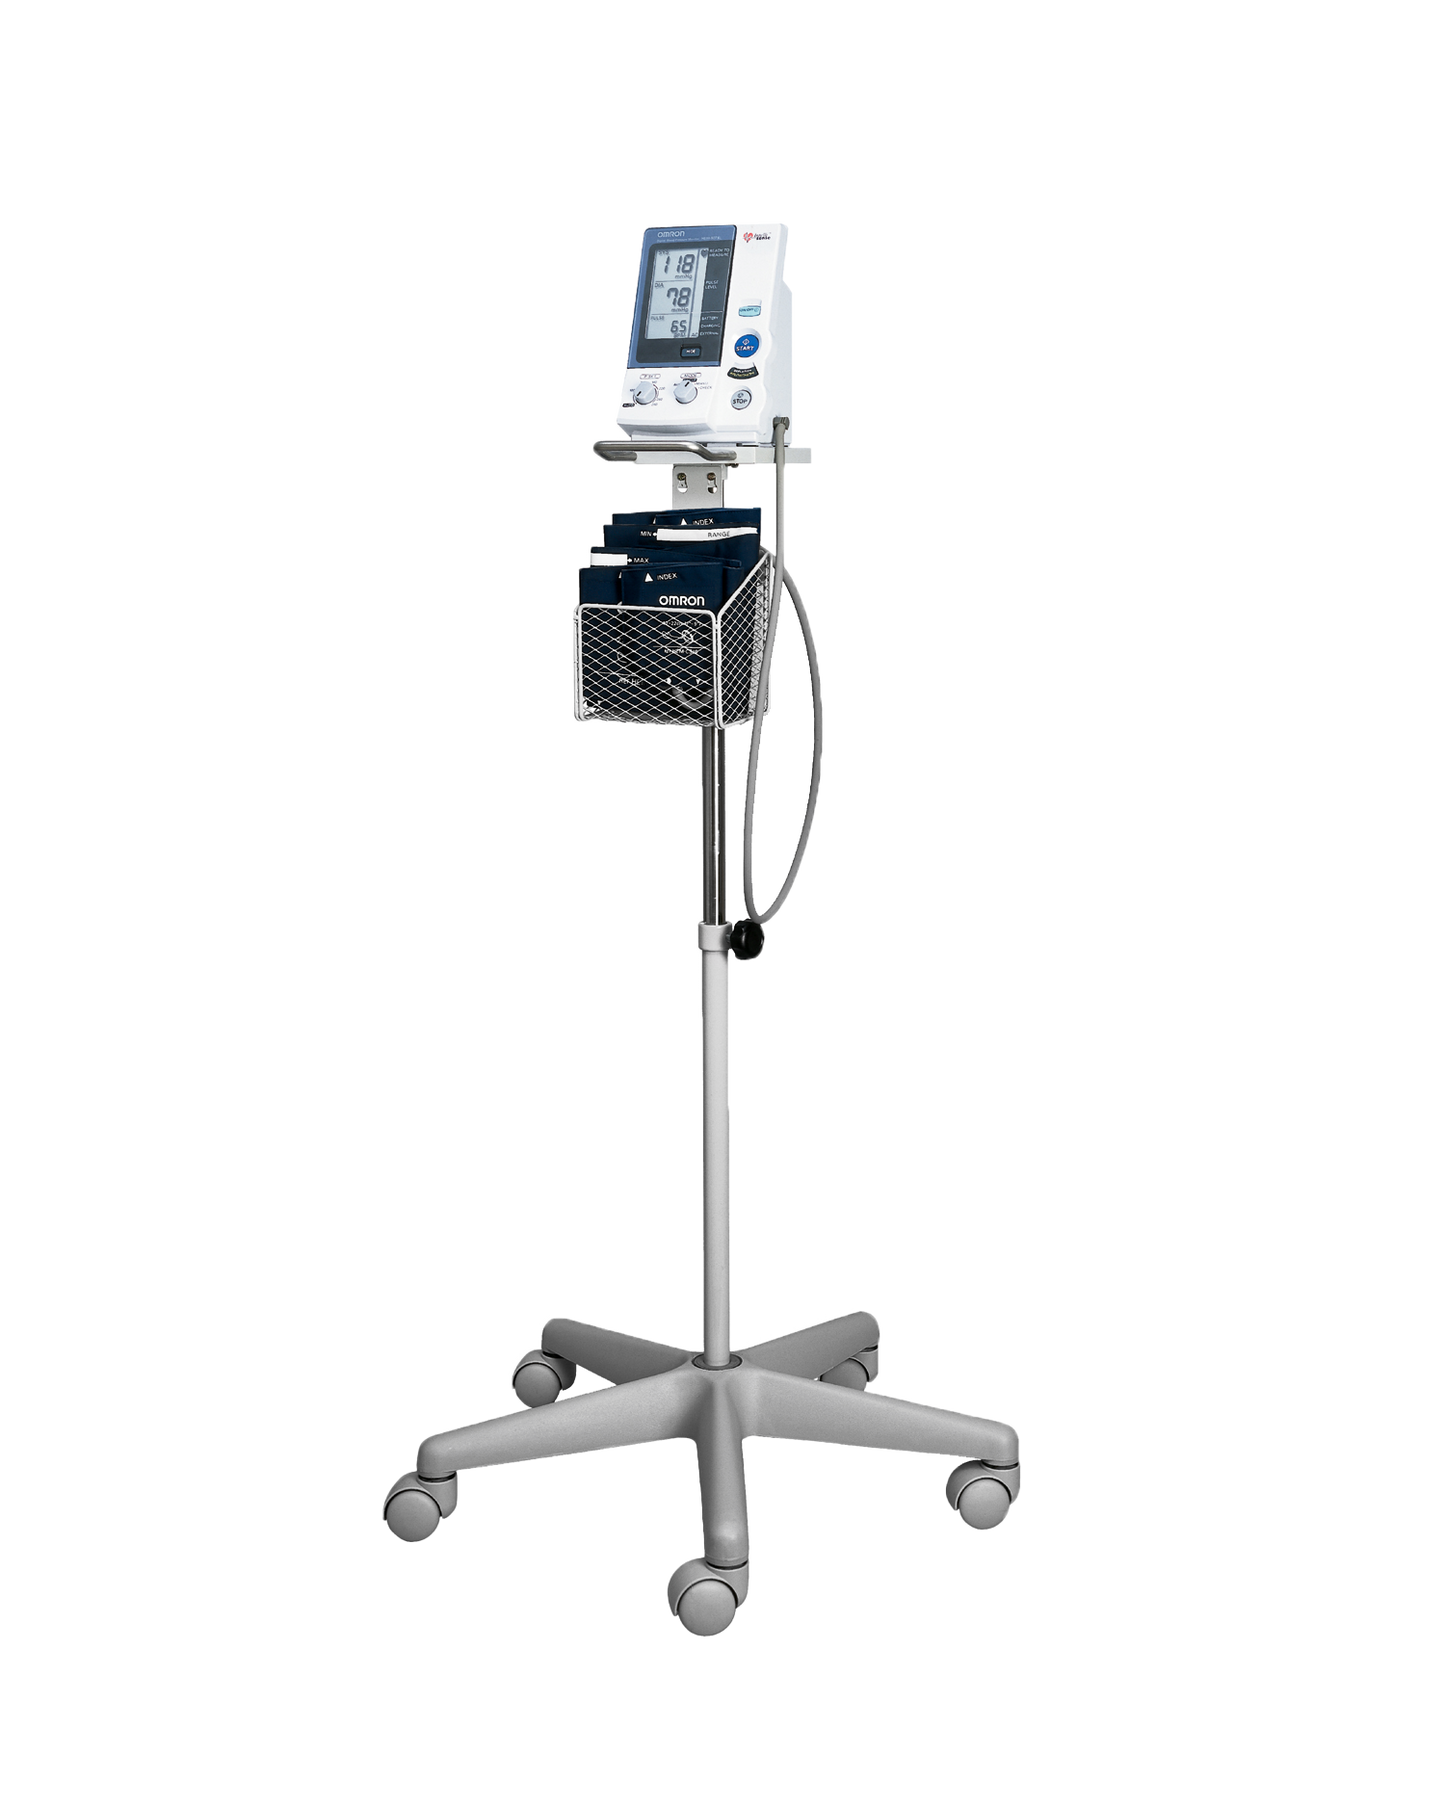 OMRON EVOLV DIGITAL AUTOMATIC BLOOD PRESSURE MEASURING APPARATUS -  Apparatus for measuring blood pressure